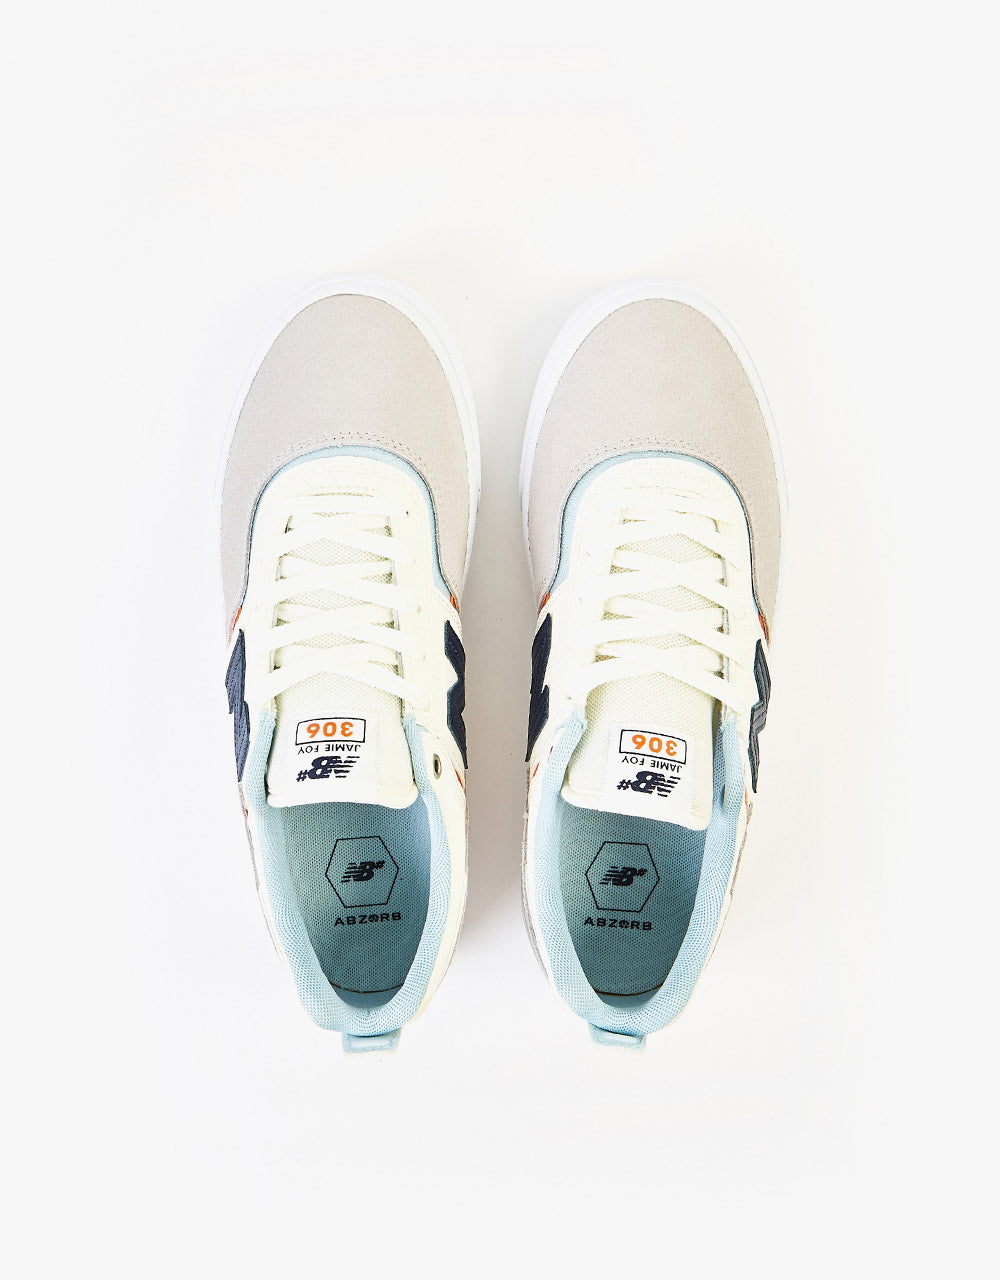 New Balance Numeric 306 Skate Shoes - Cream/Orange